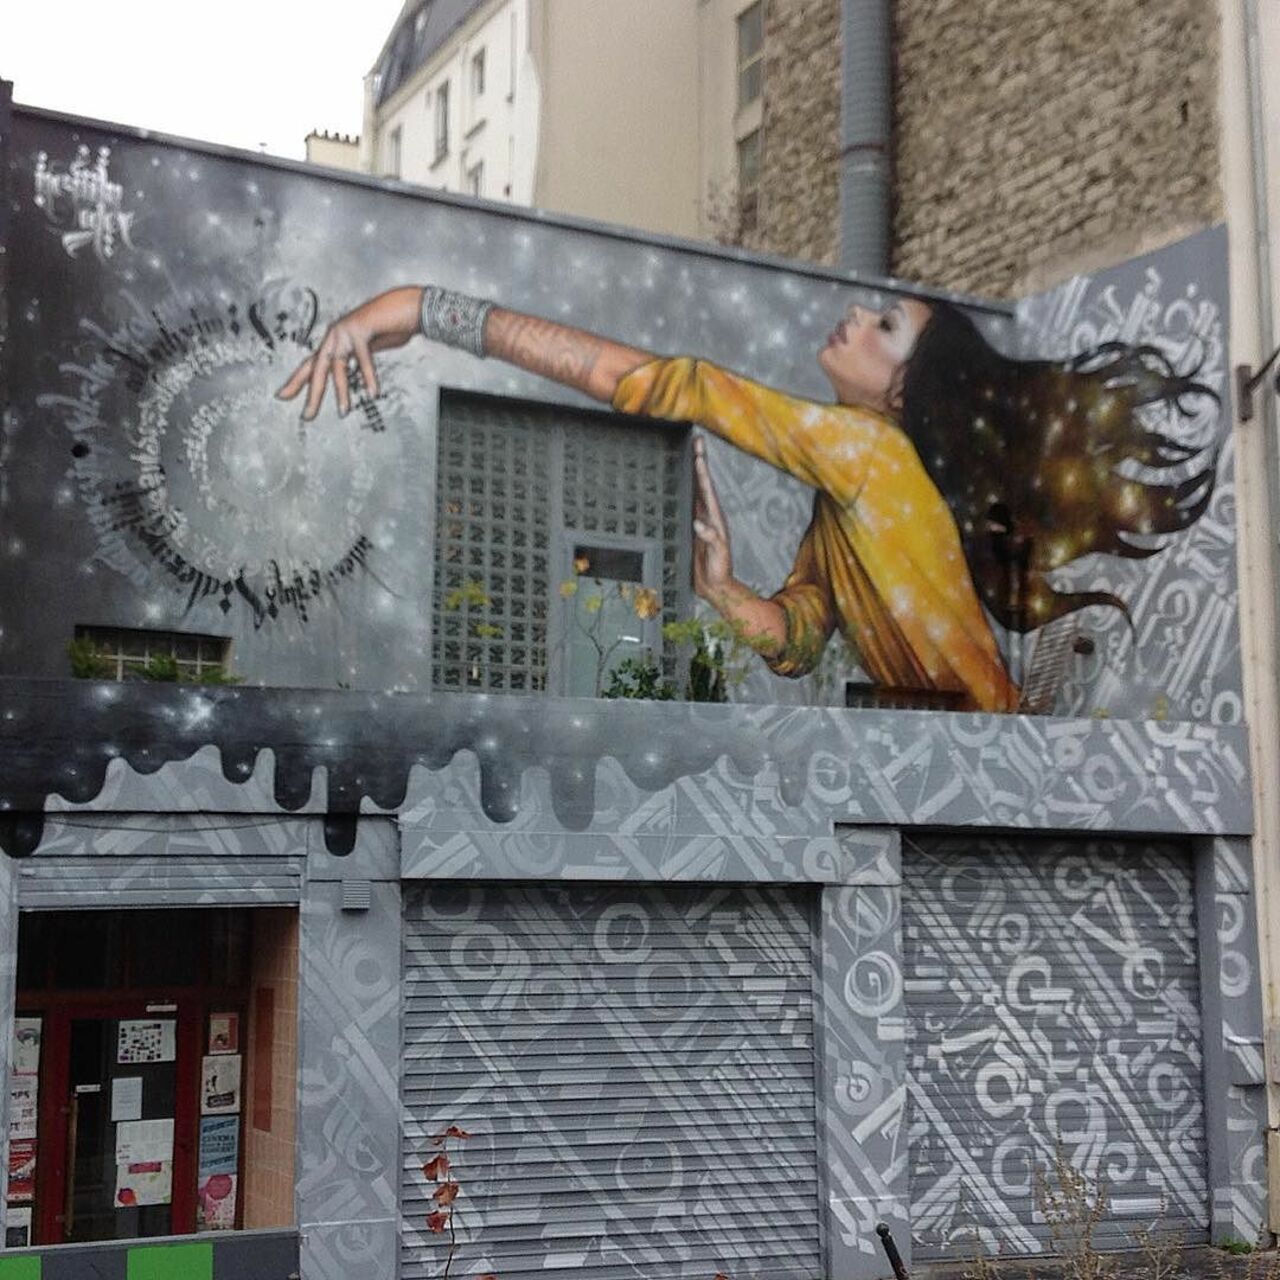 RT @BenWest: RT @circumjacent_fr: #Paris #graffiti photo by @stefetlinda http://ift.tt/1GuhU6l #StreetArt https://t.co/B264Wejq5U